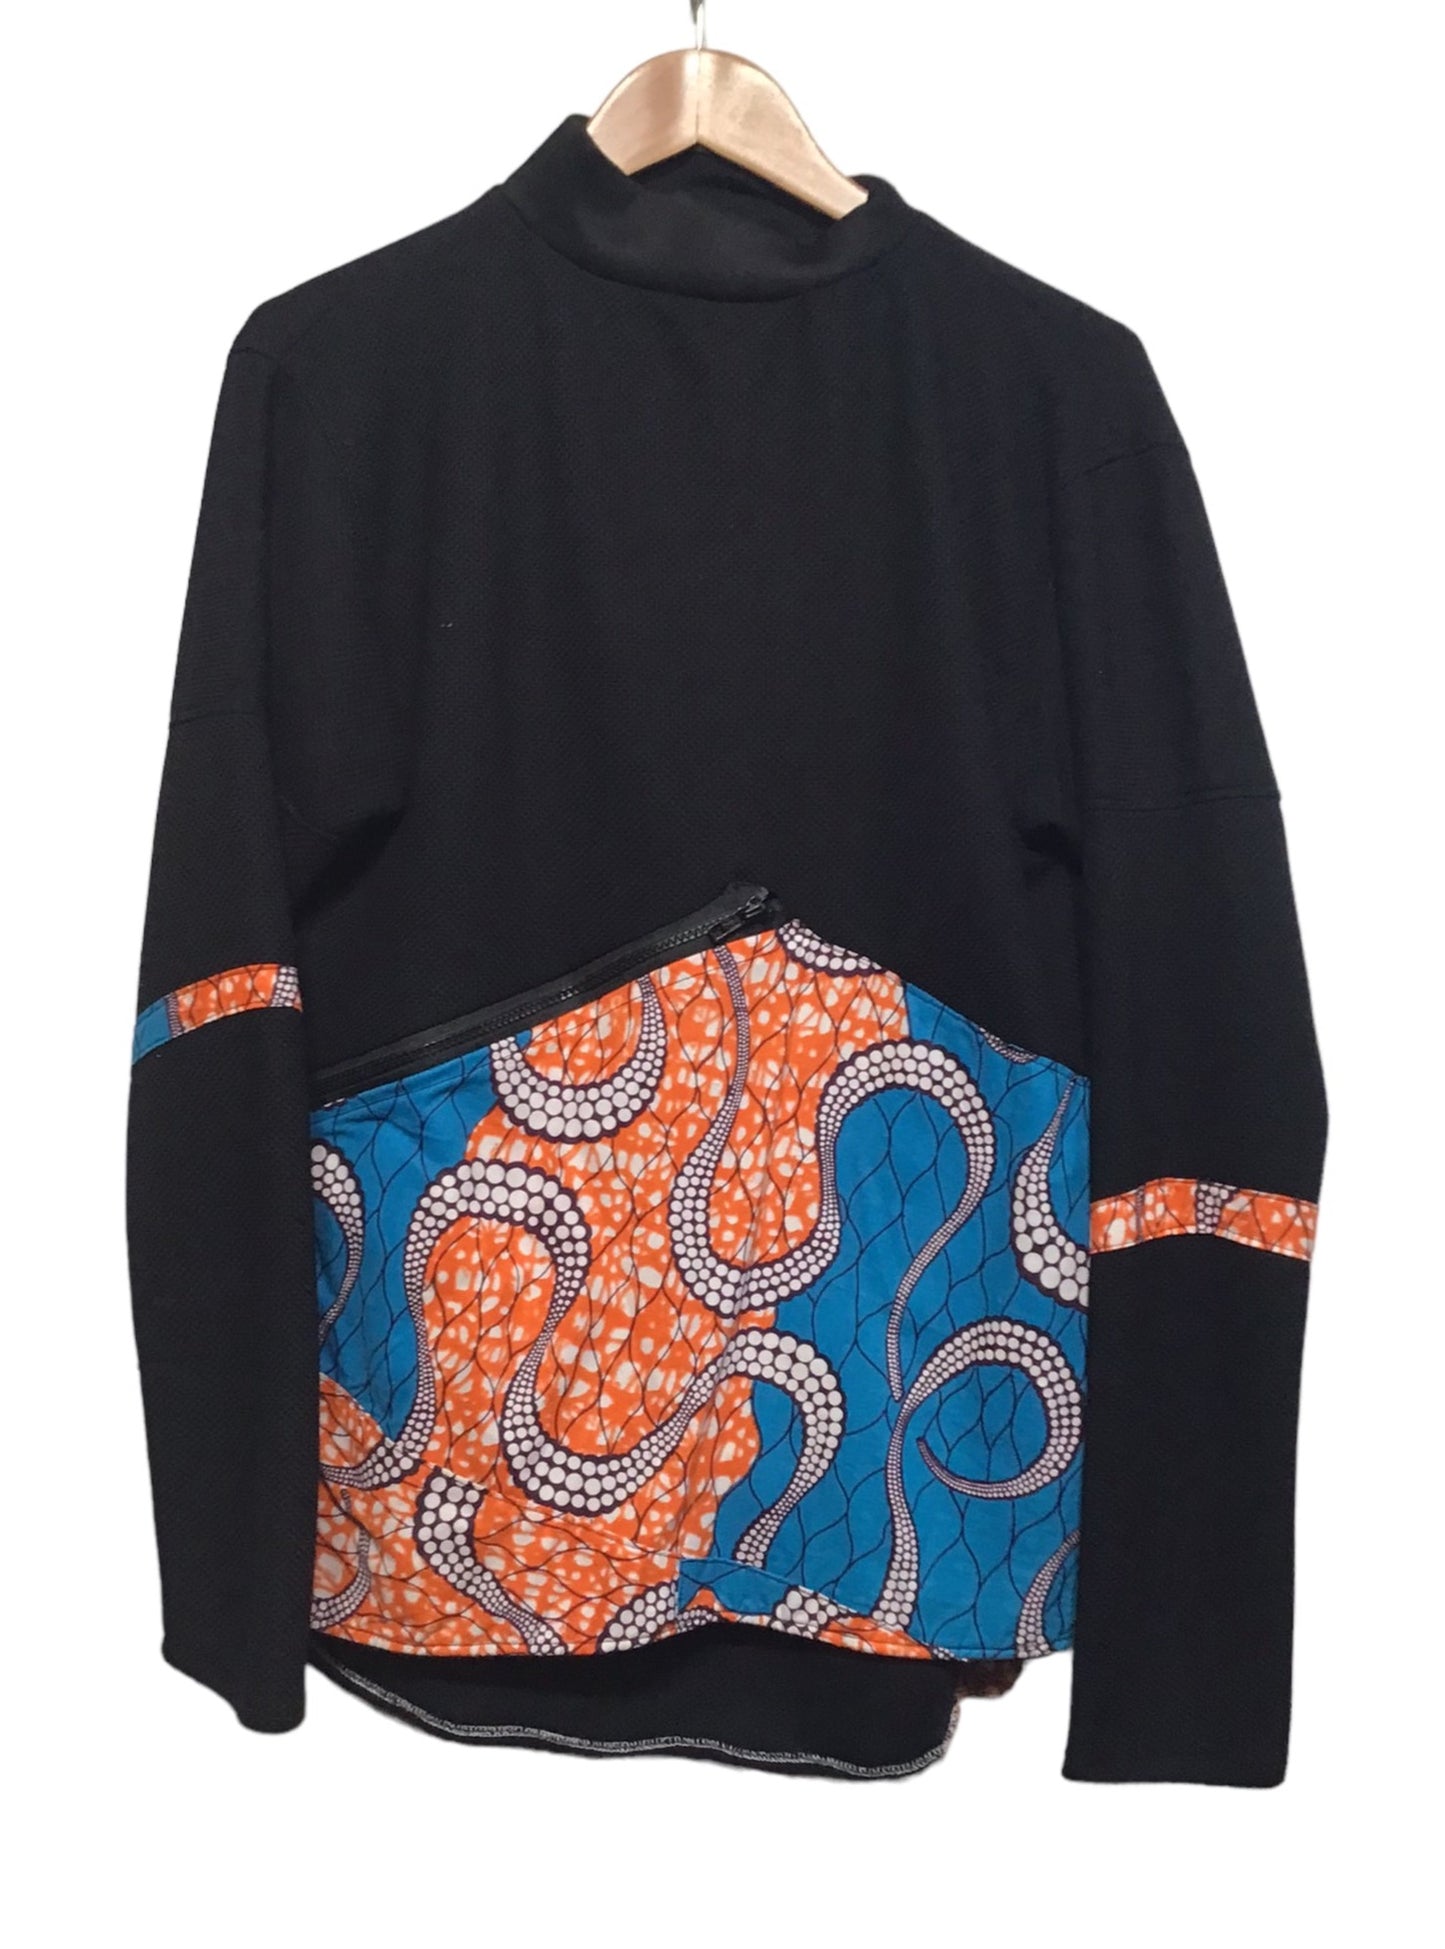 Black Patterned Sweatshirt (Size M)